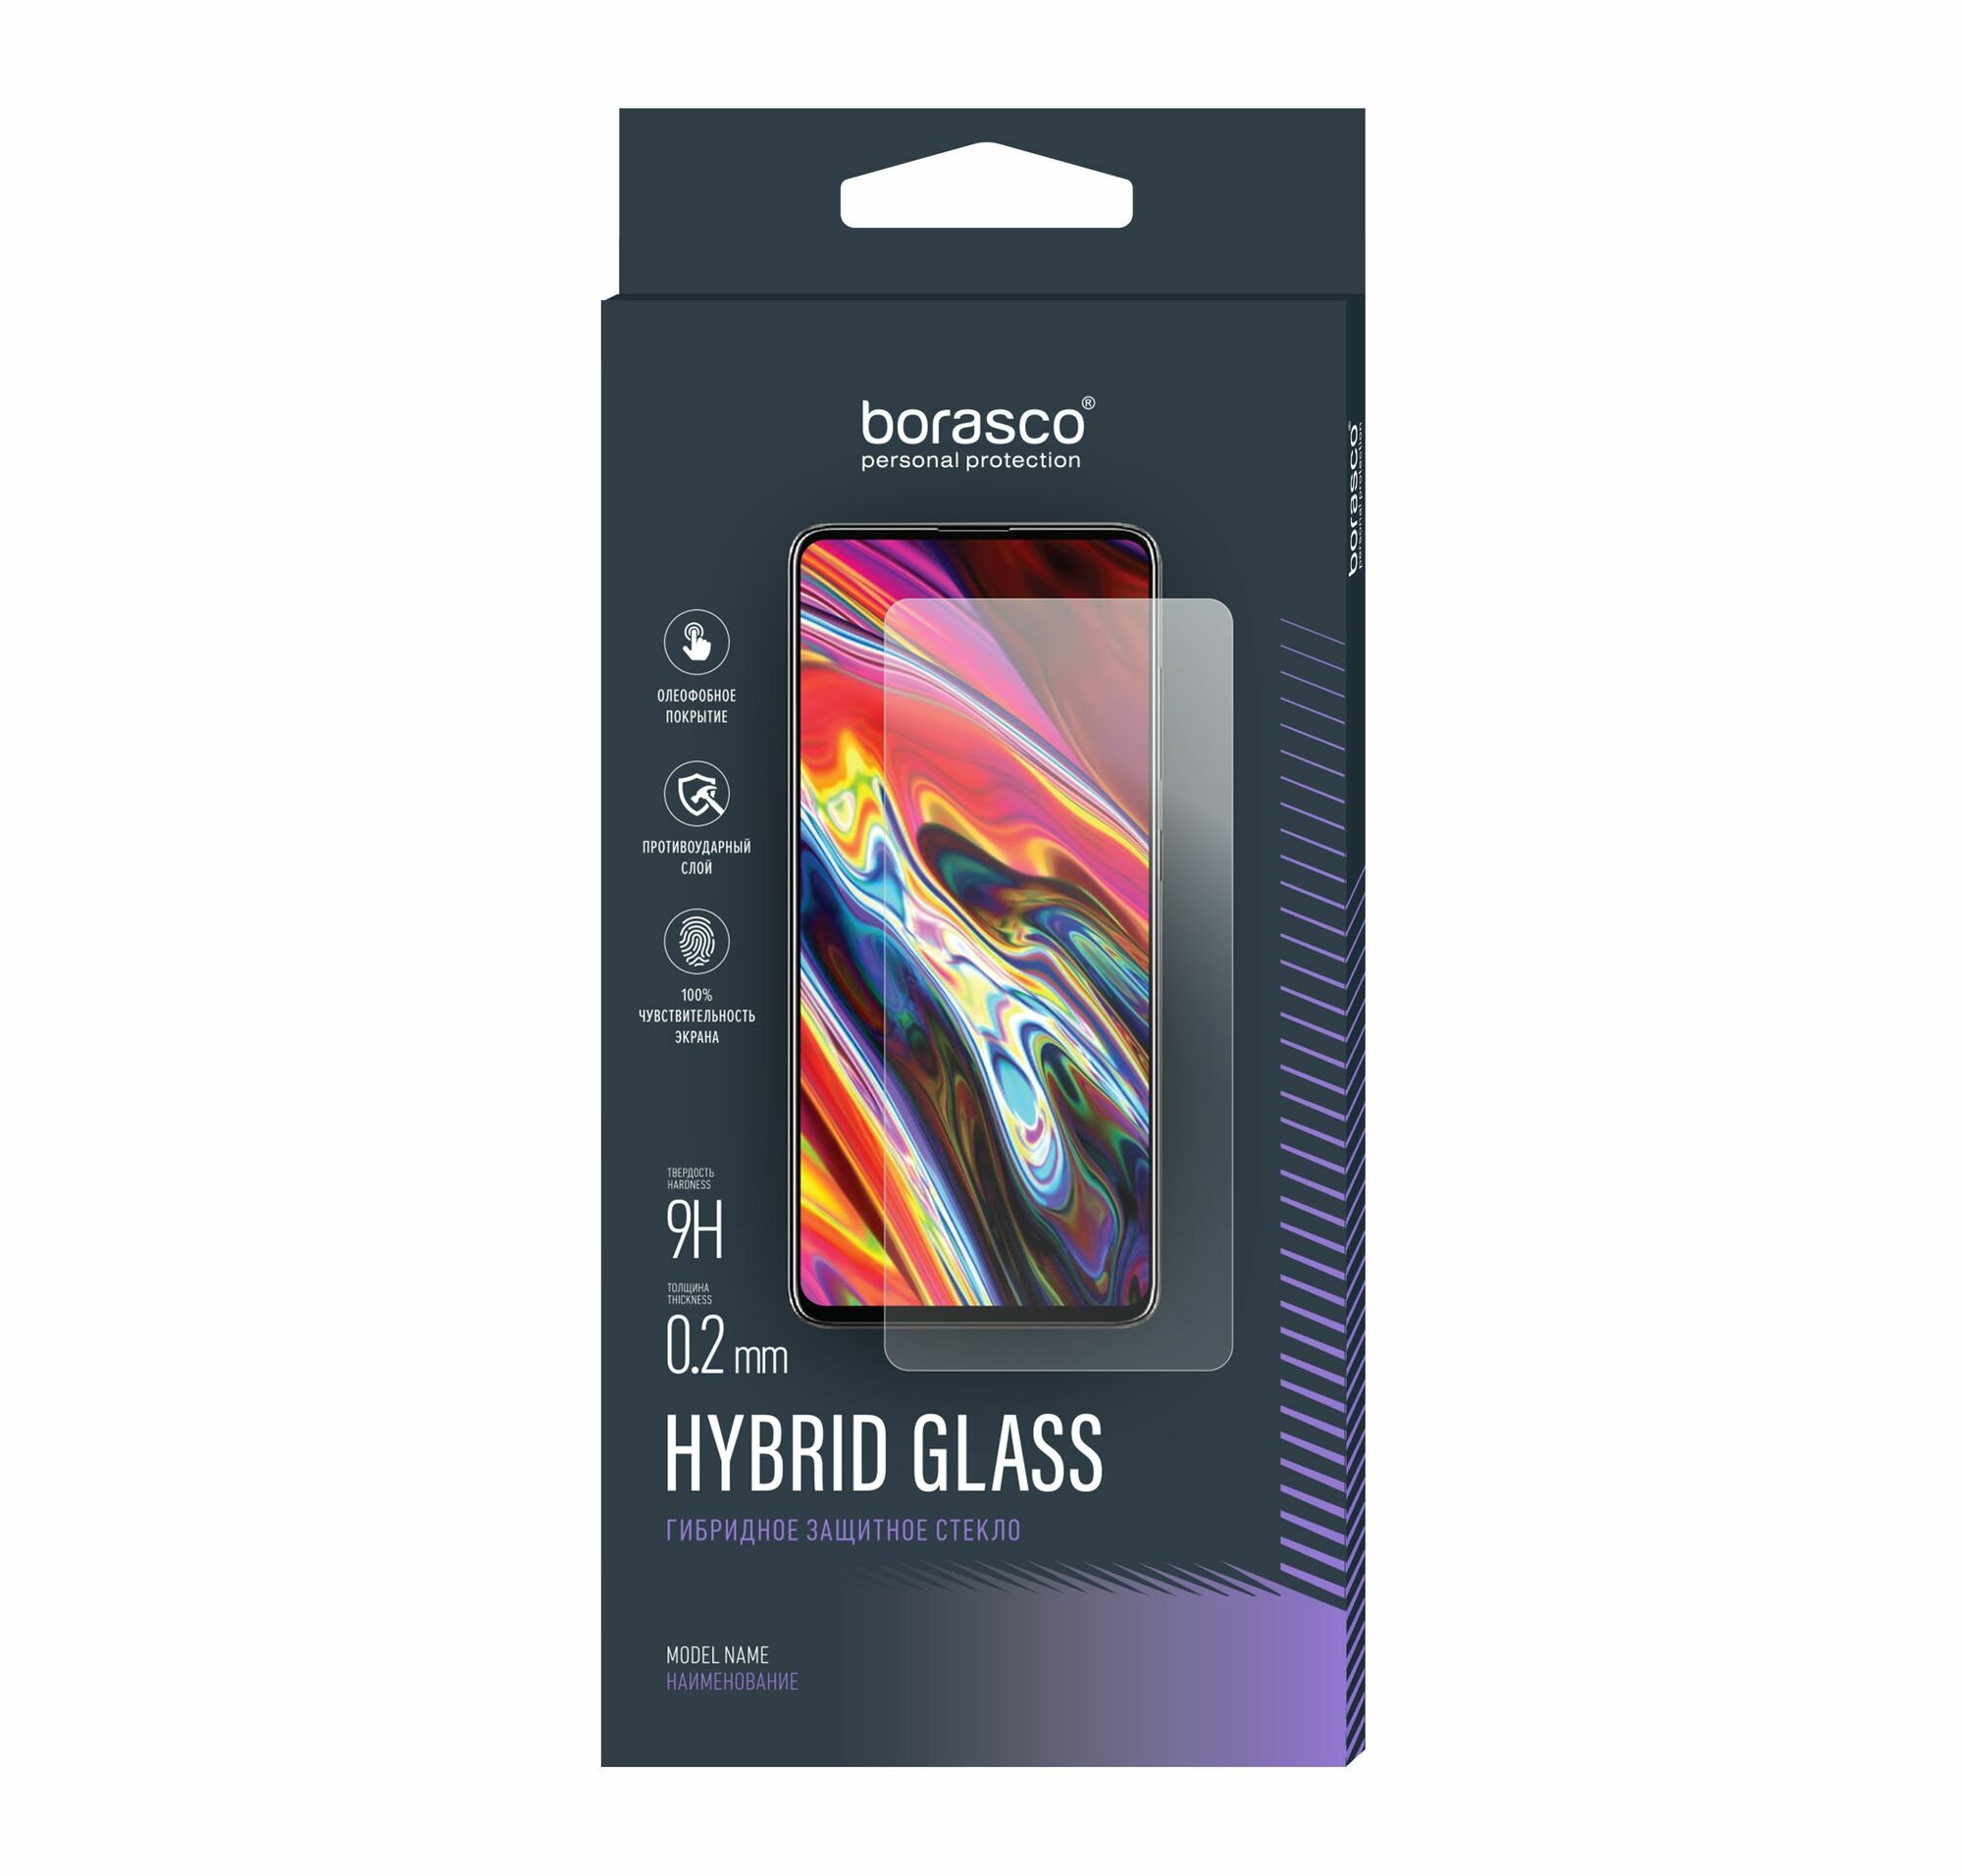 Стекло защитное Hybrid Glass VSP 026 мм для Samsung Galaxy Tab A 8.0 SM-T385 LTE